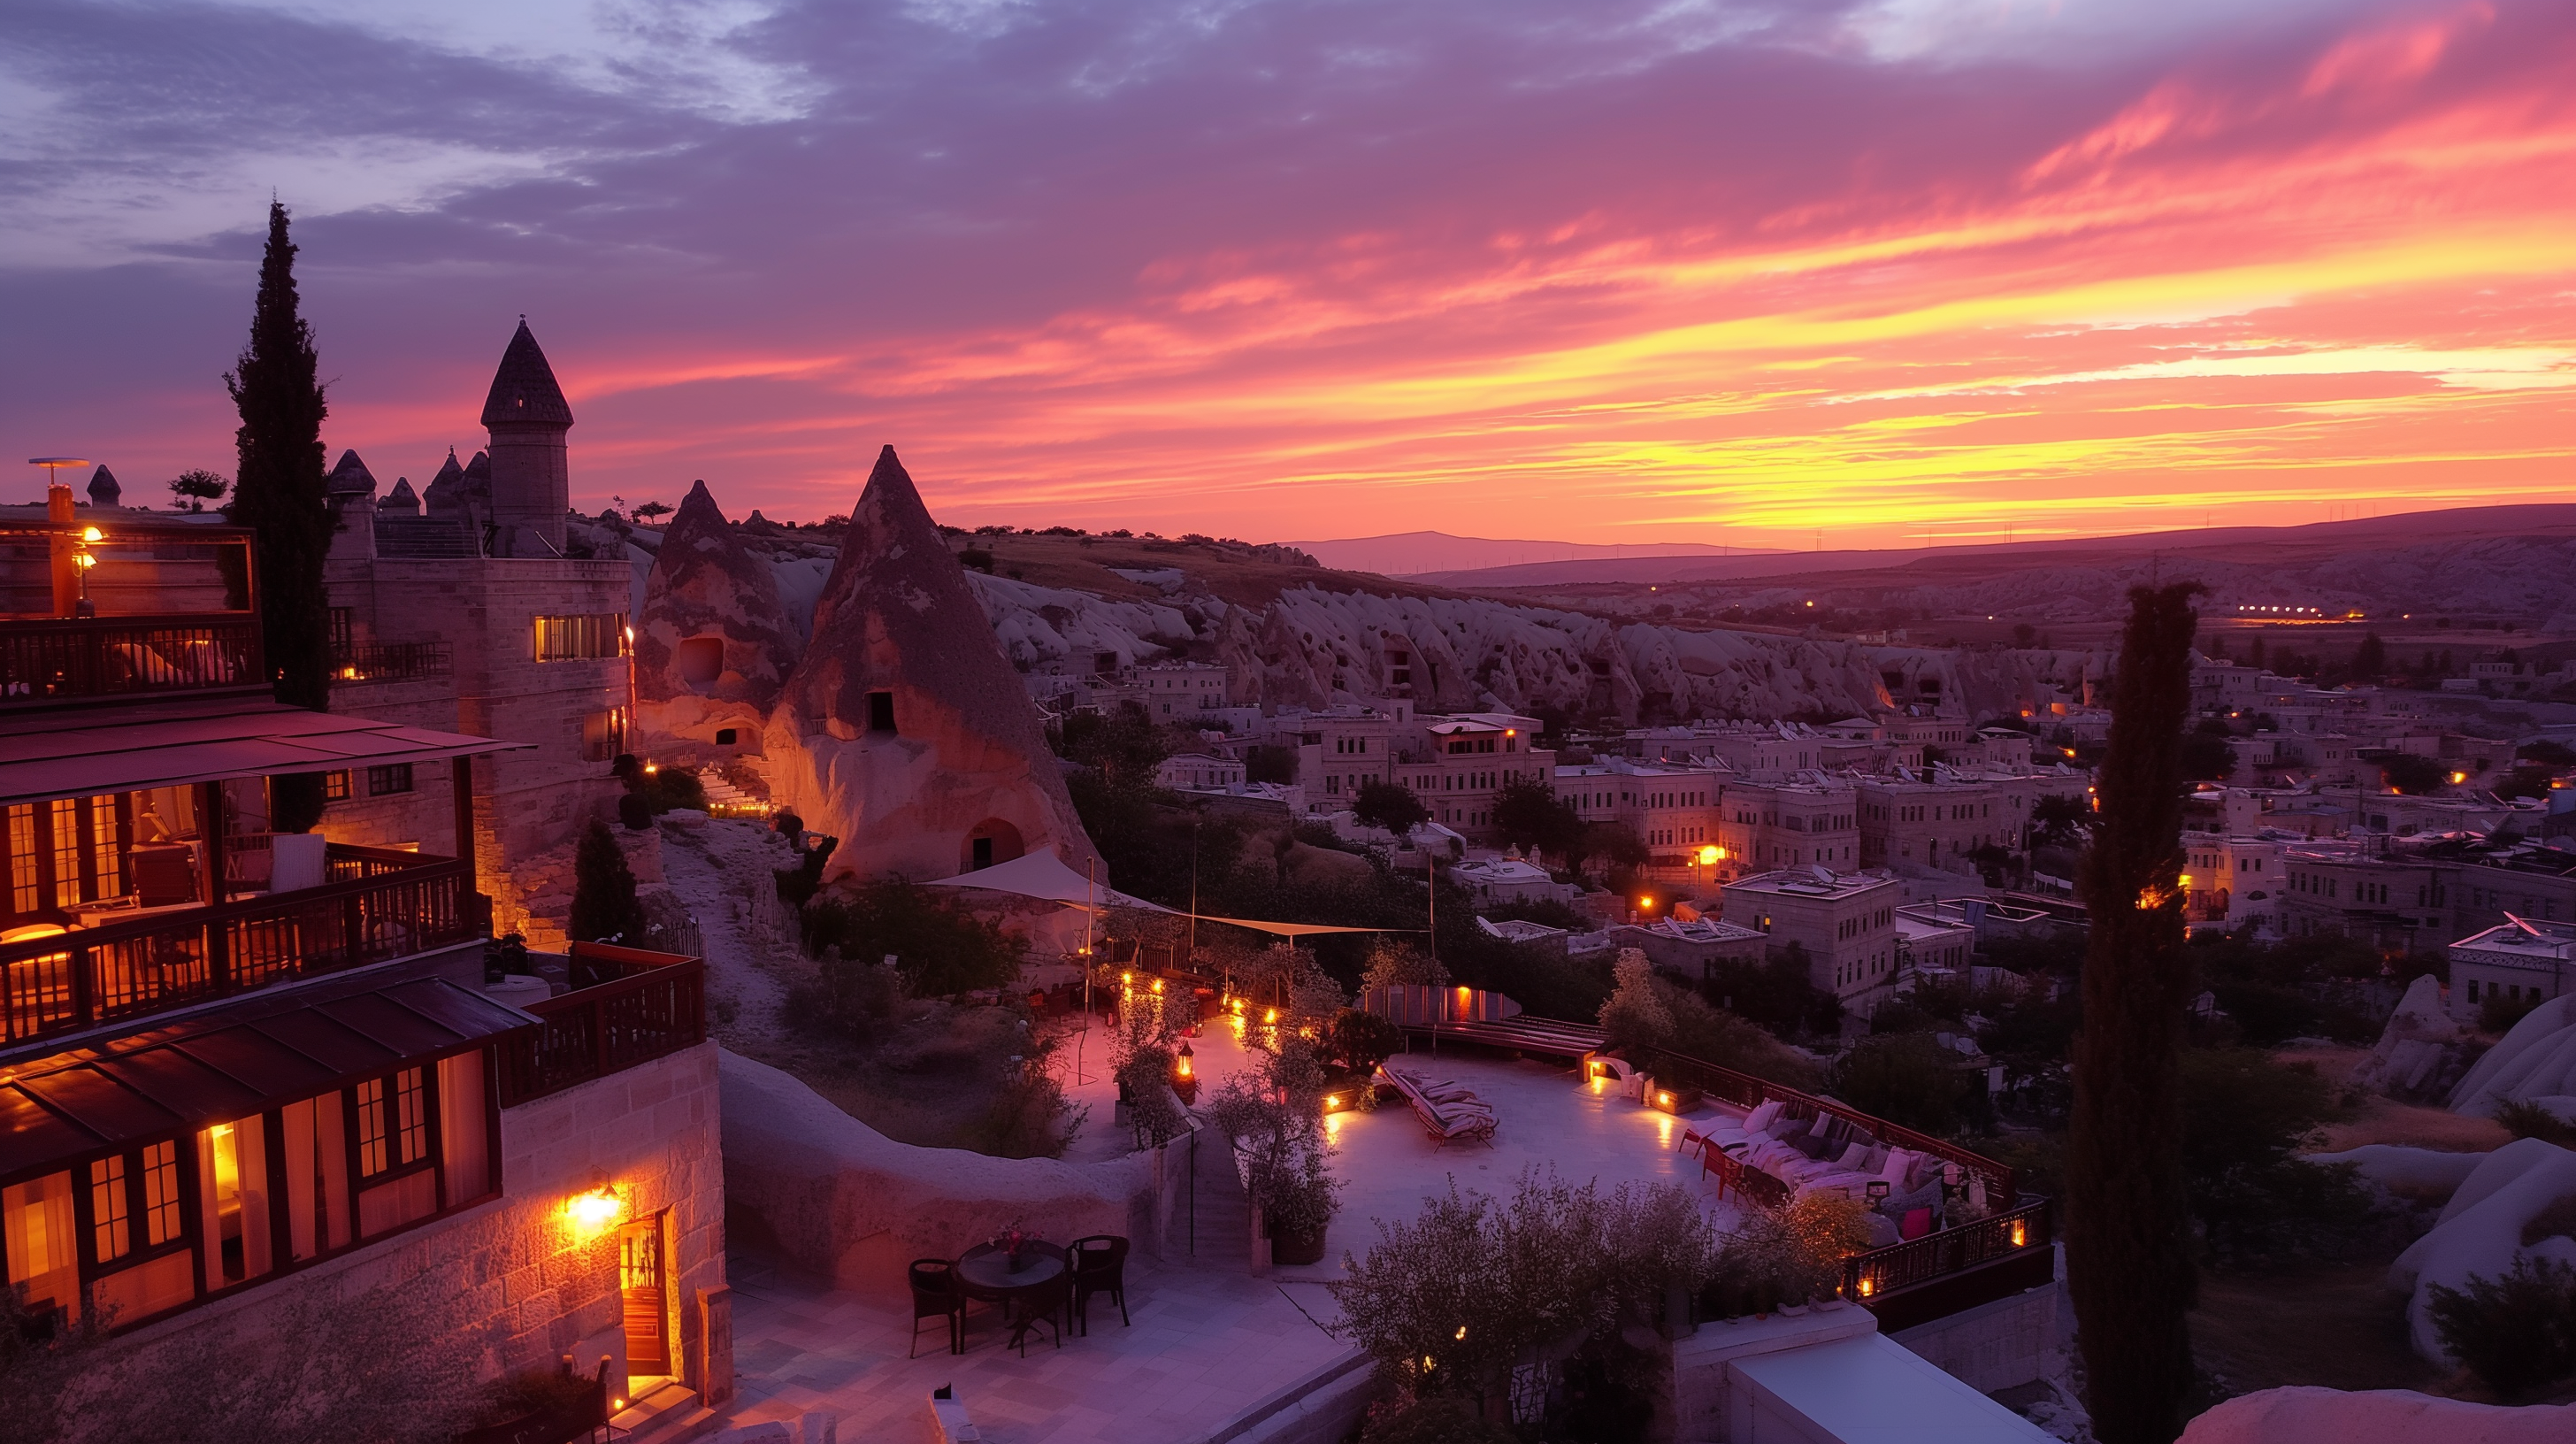 Cappadocia image taken from an hotel